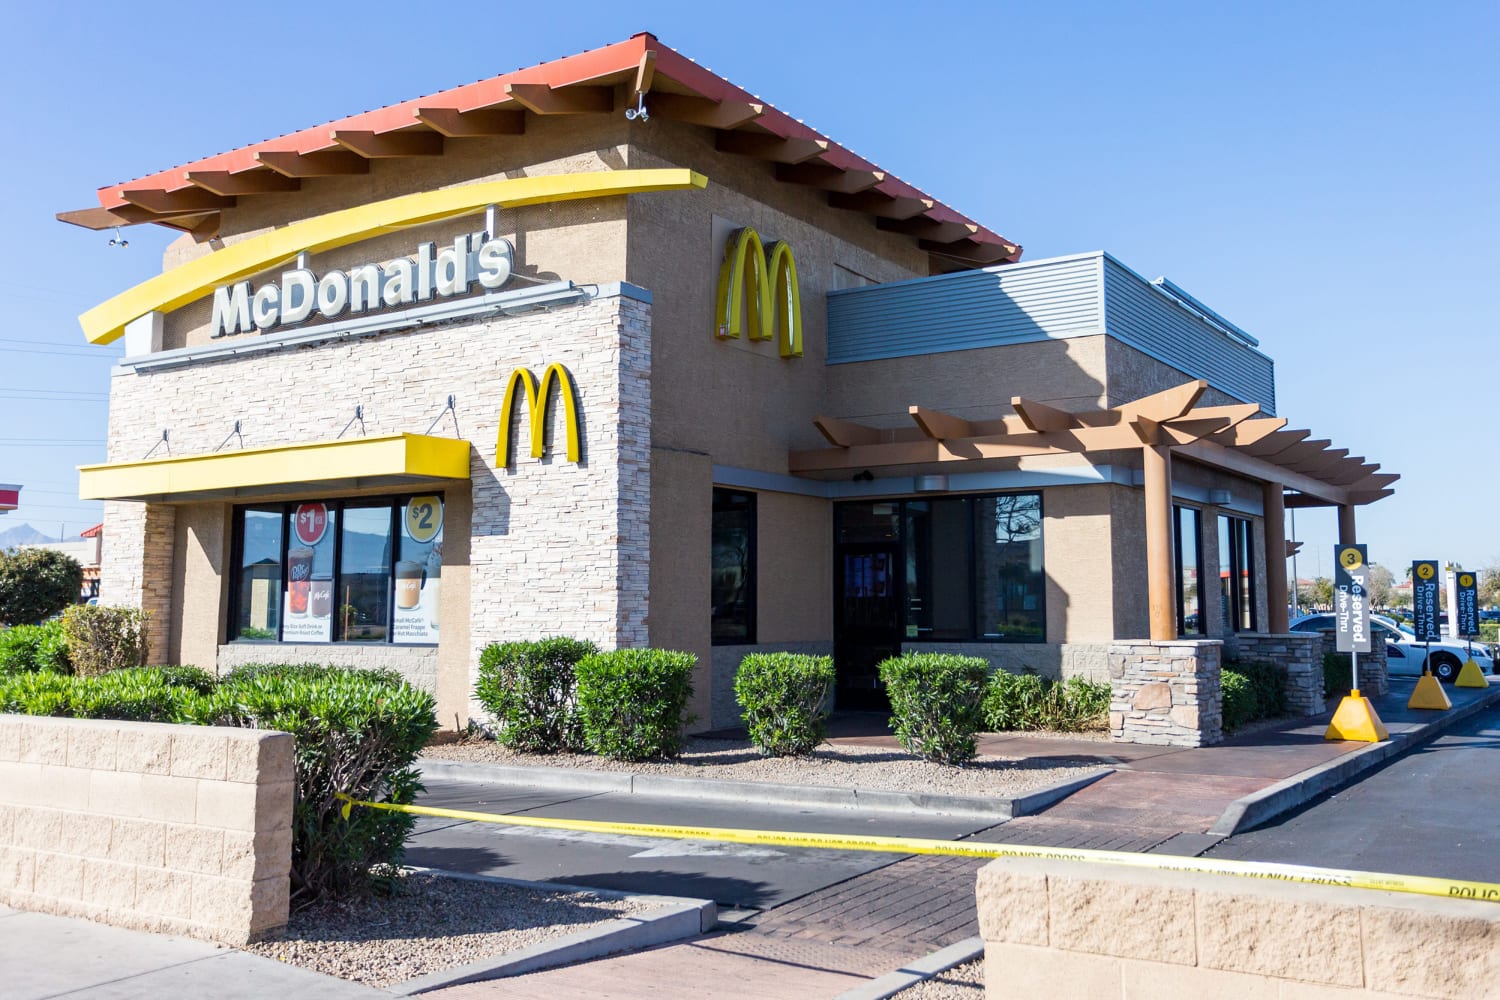 Teen suspect in McDonald's slaying turns himself in